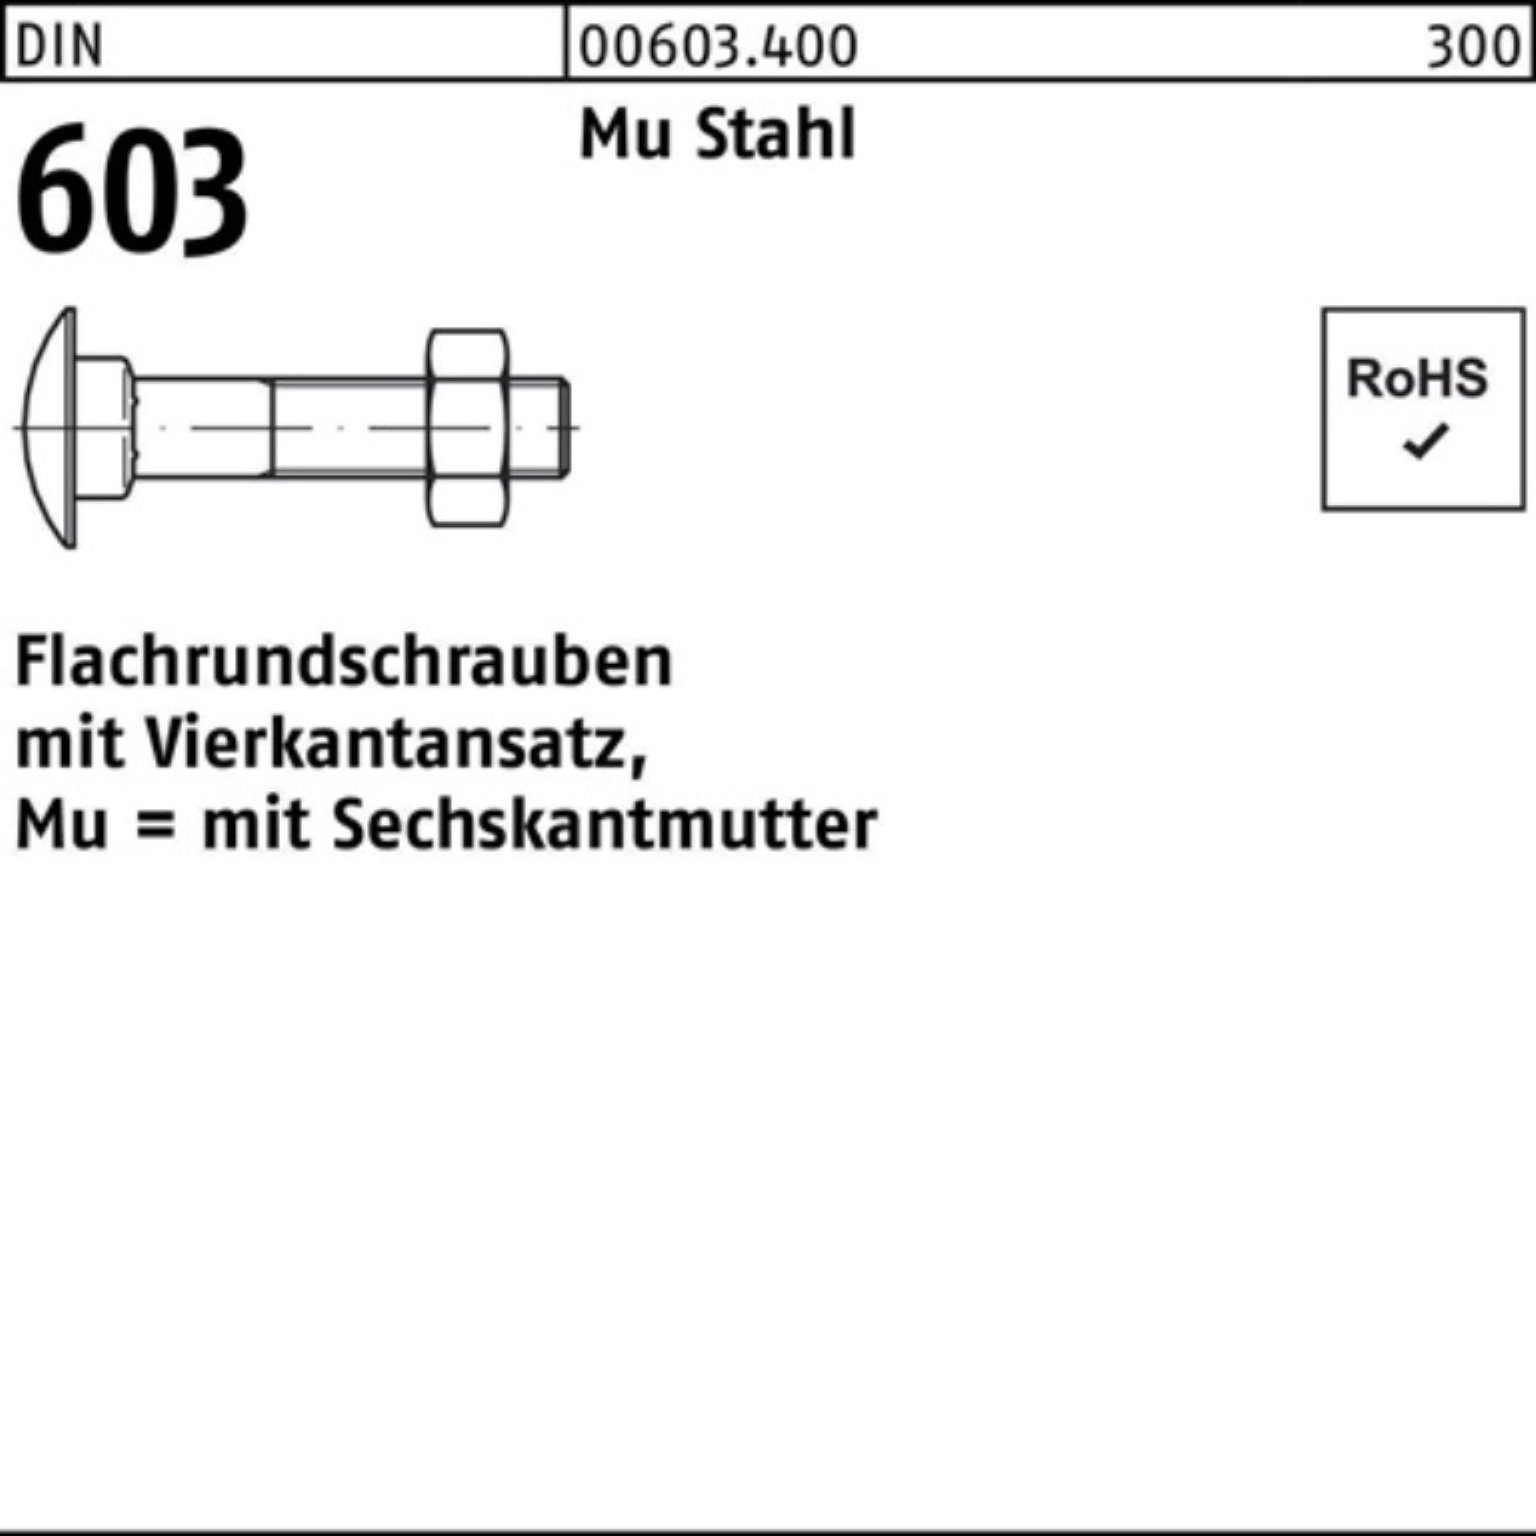 Reyher Pack Vierkantansatz/6-ktmutter 603 Schraube M16x60 DIN 100er Flachrundschraube